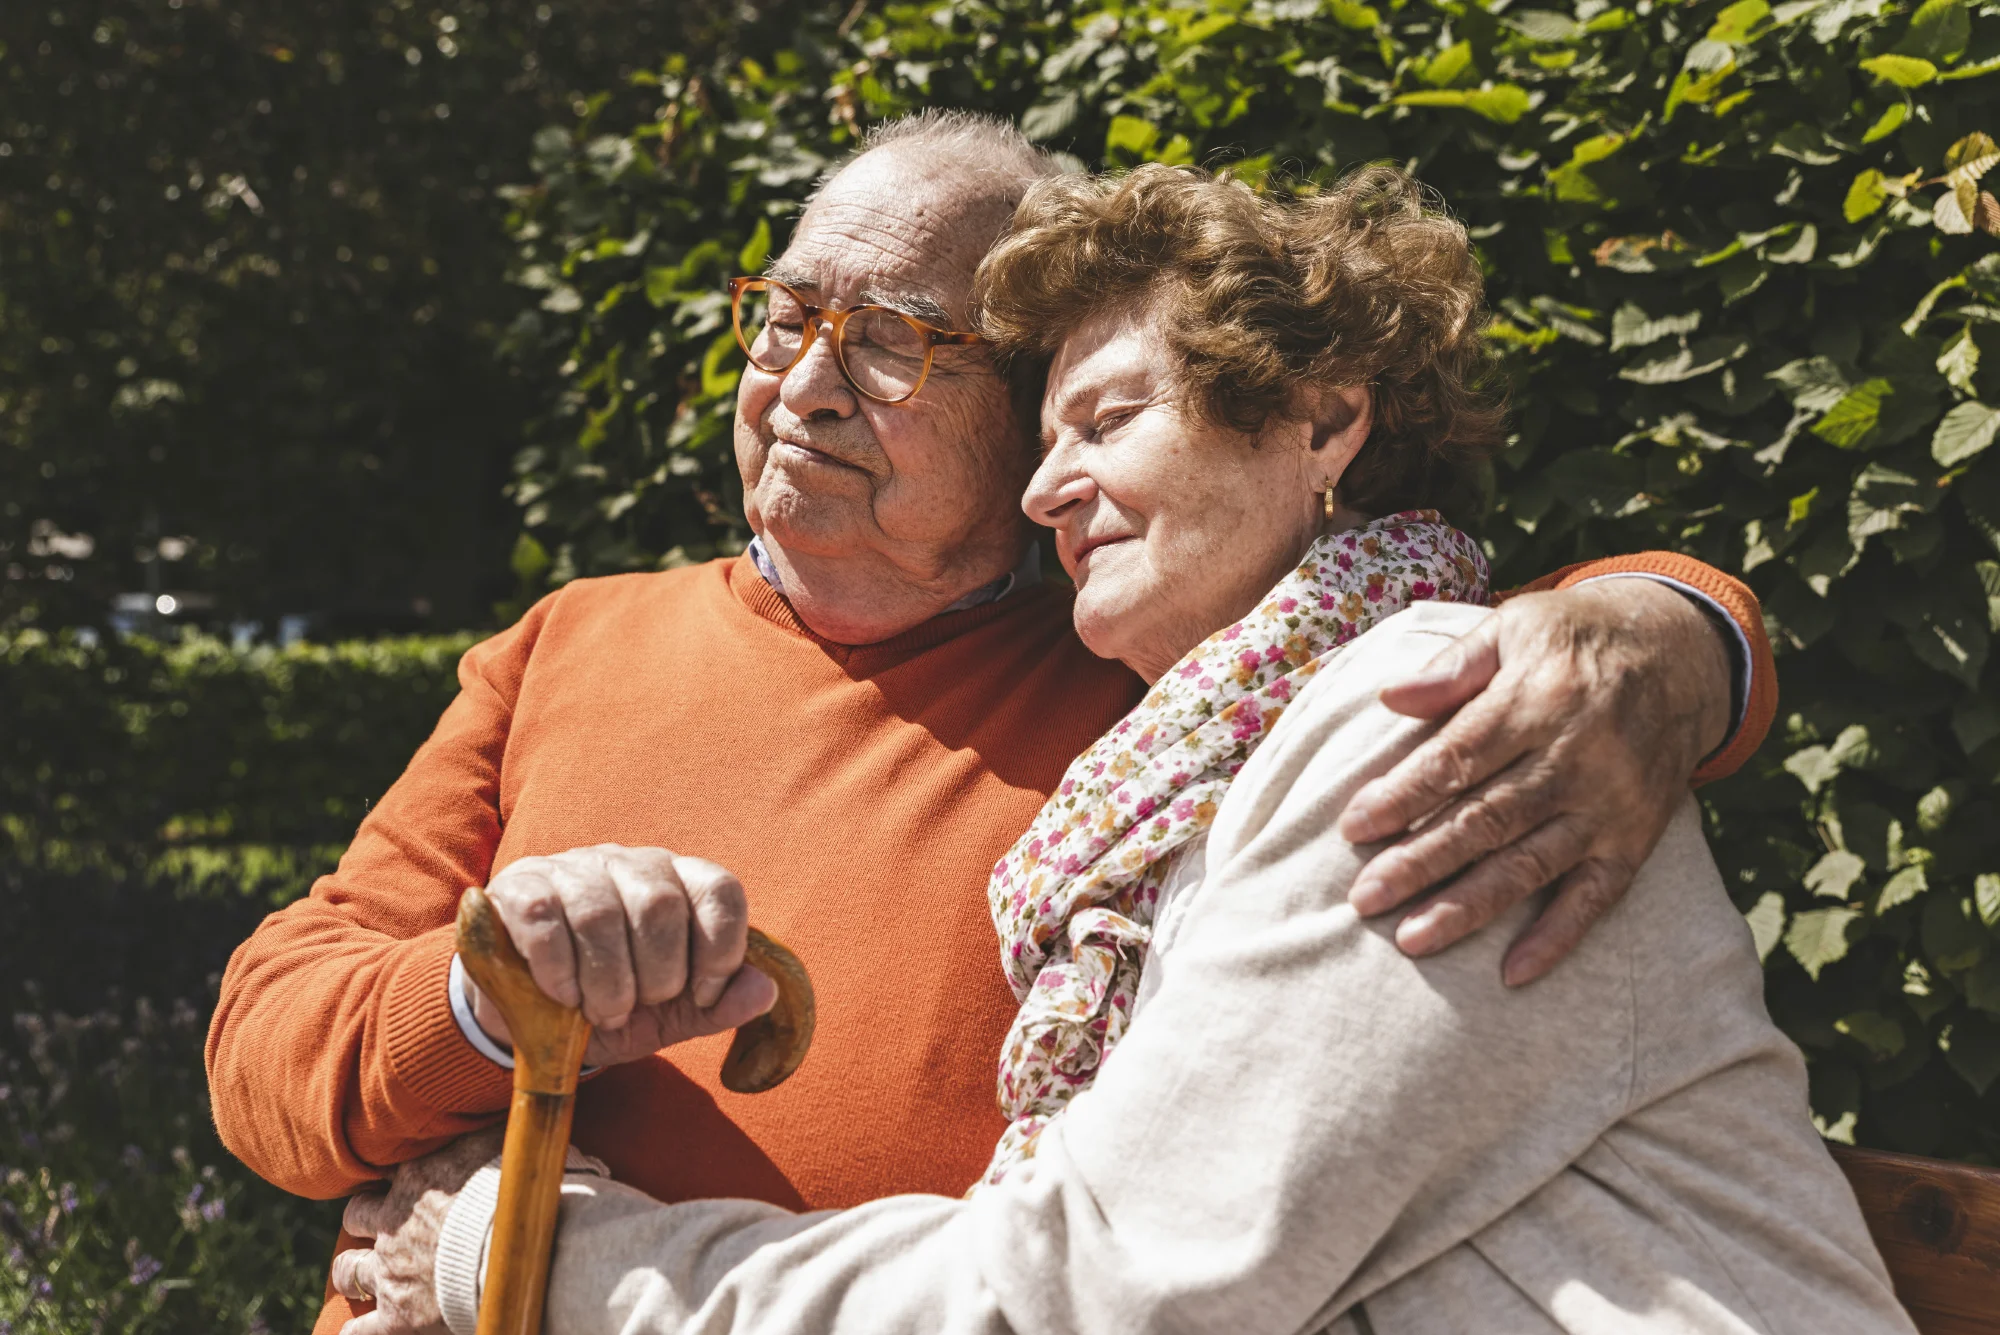 Senior couple embracing on park bench